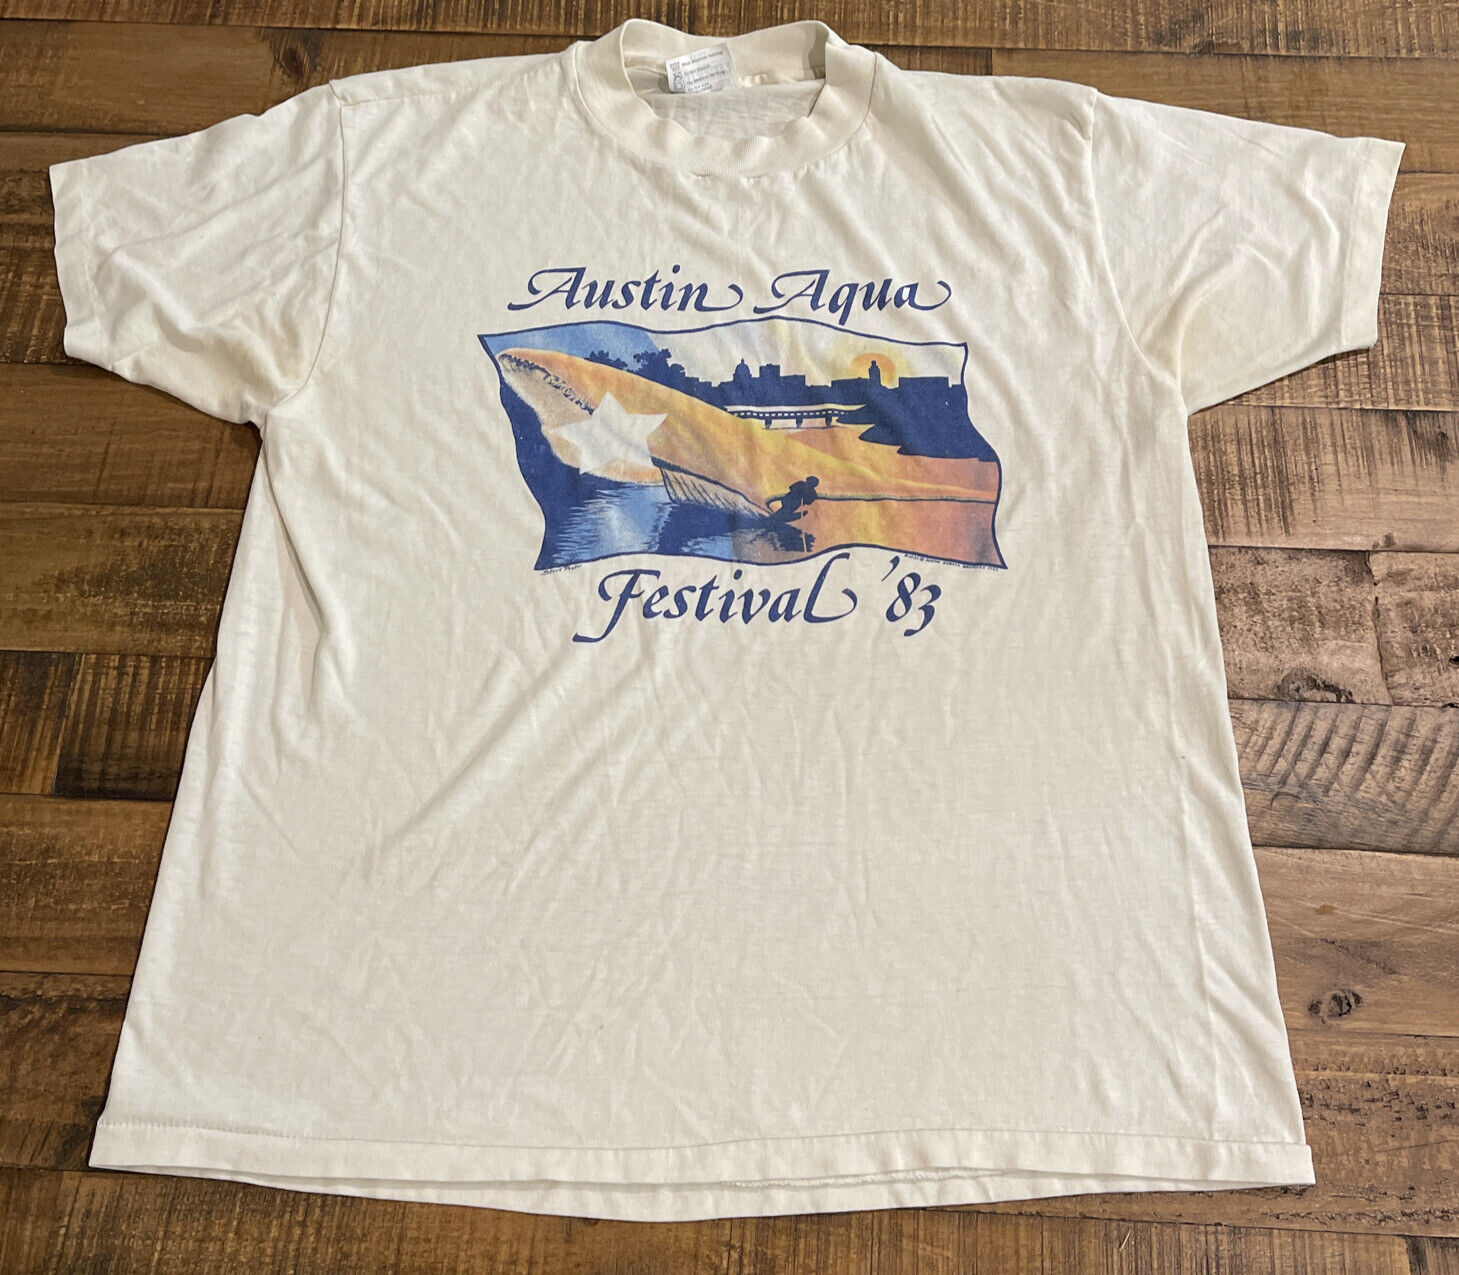 RARE 1983 Austin Aqua Festival T-SHIRT Size Large super rare vintage